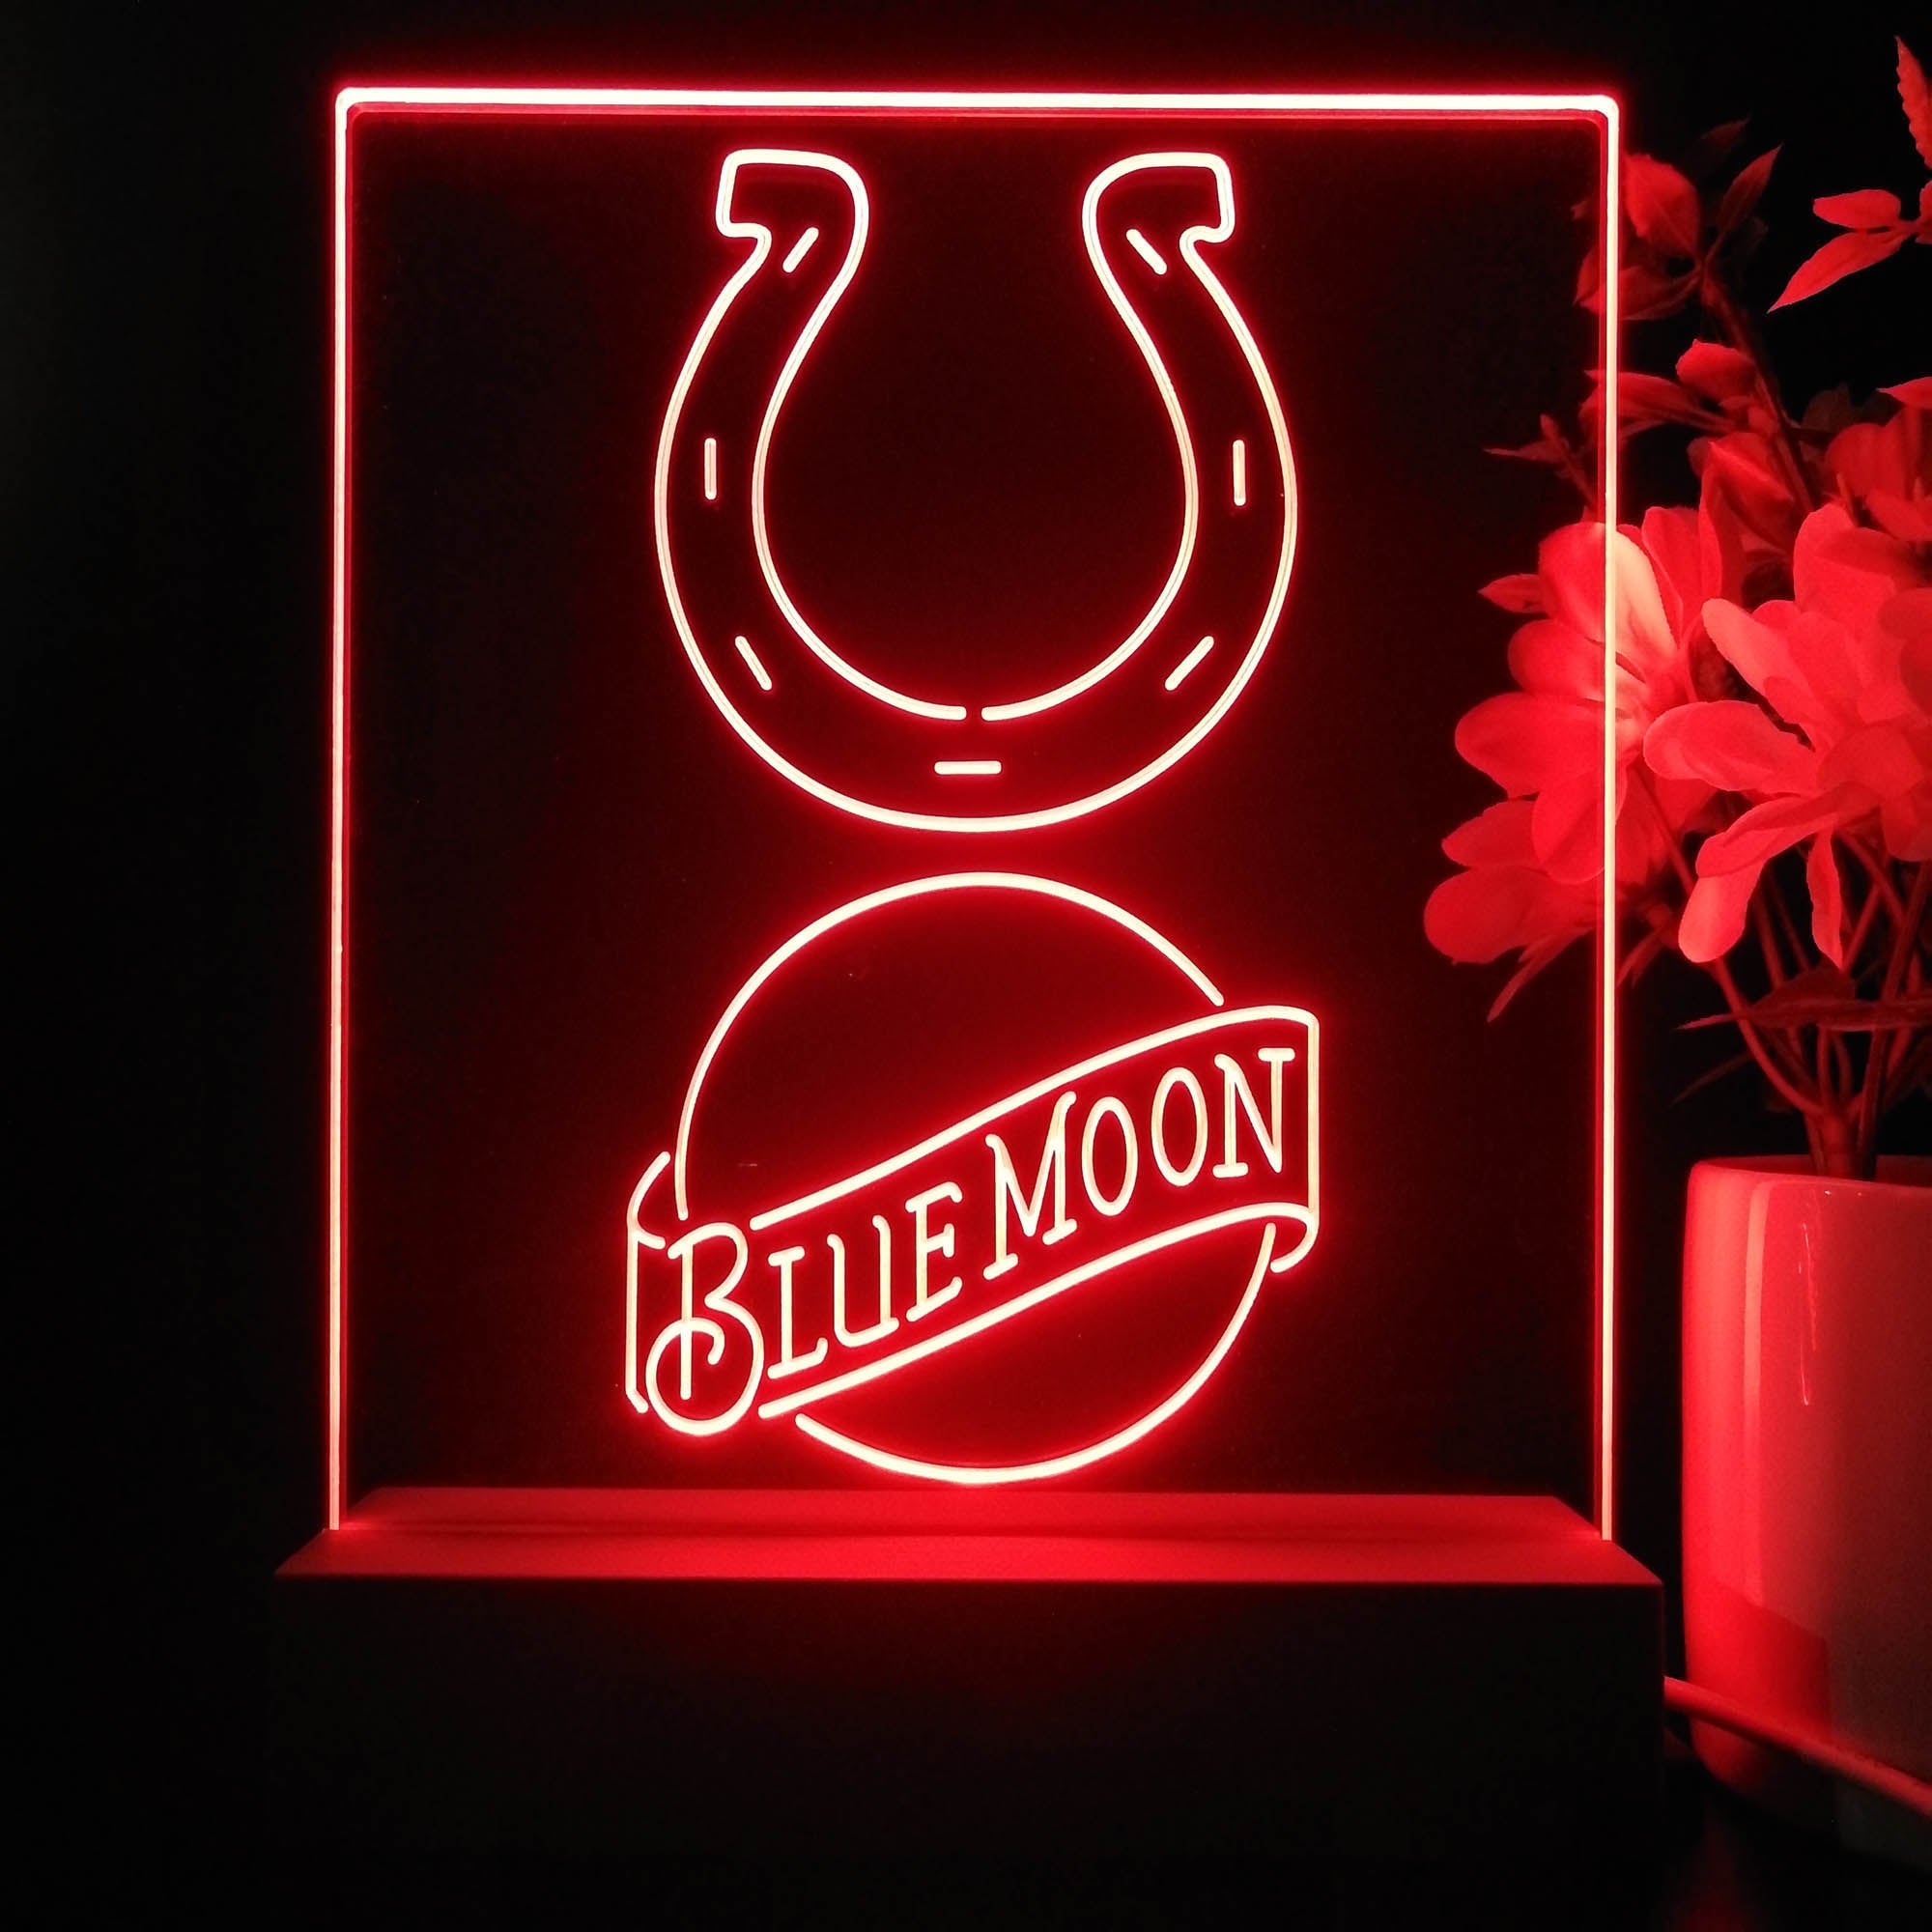 Indianapolis Colts Blue Moon Neon Sign Pub Bar Lamp